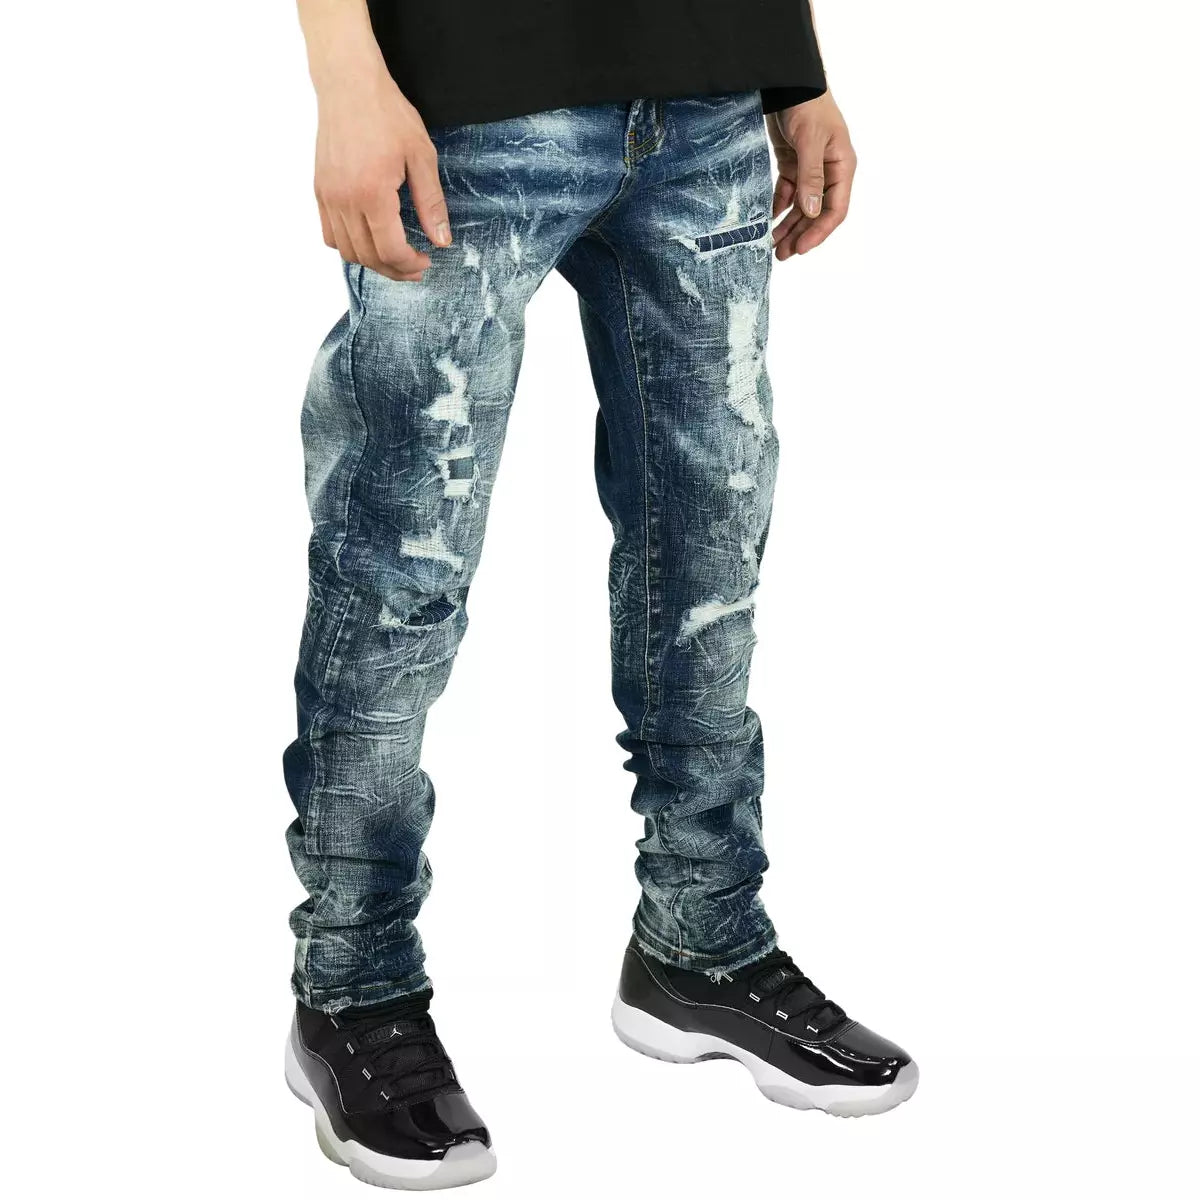 PREME Indigo Denim Ripped Jeans (PR-WB-1012)